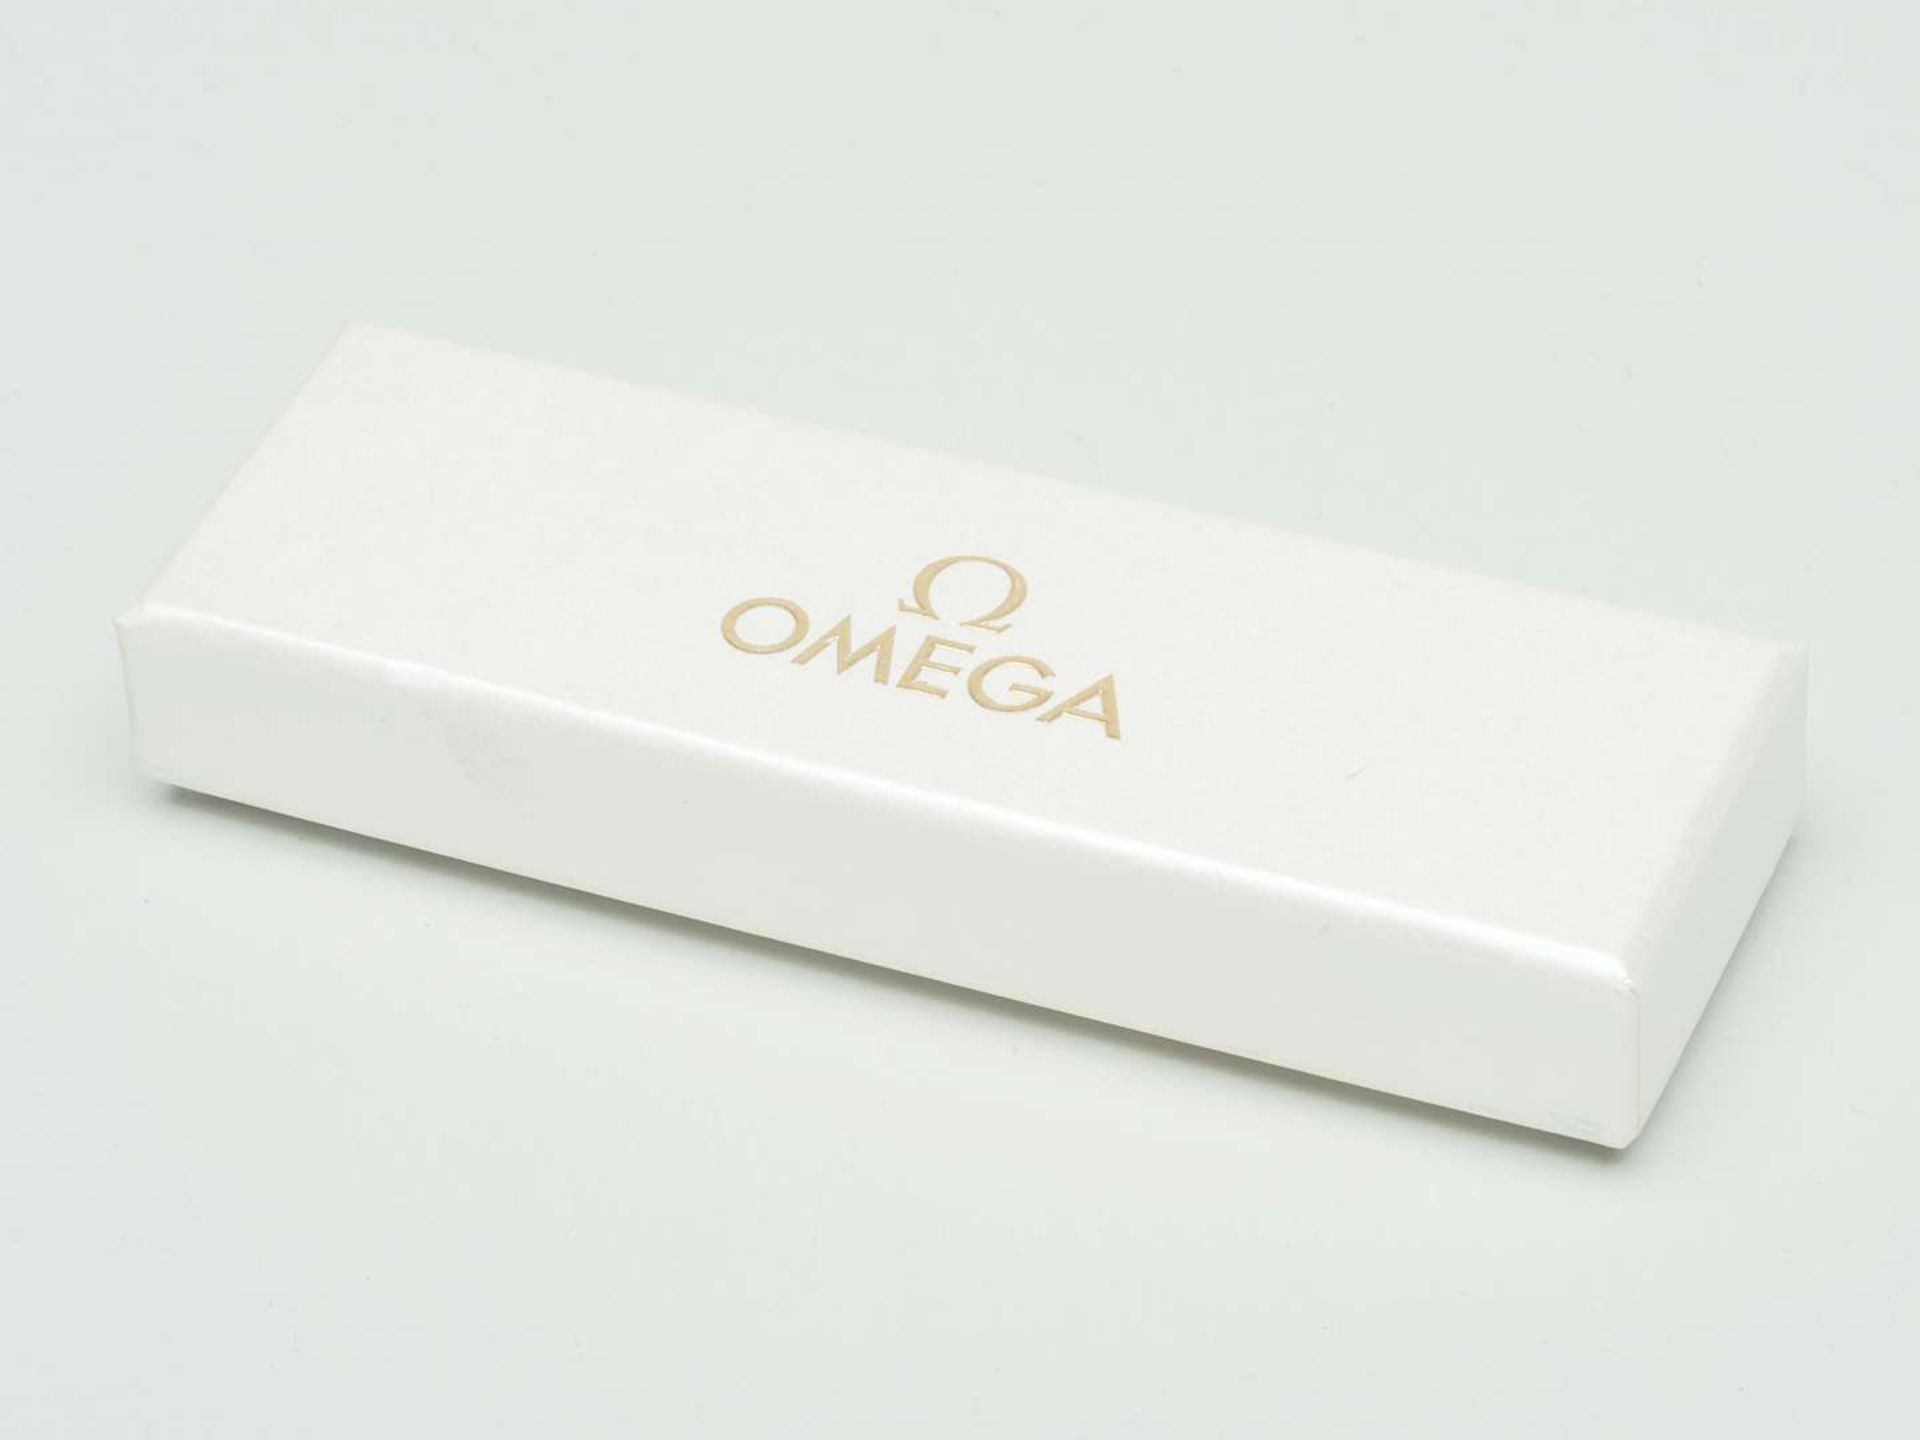 Omega pen - Image 3 of 3